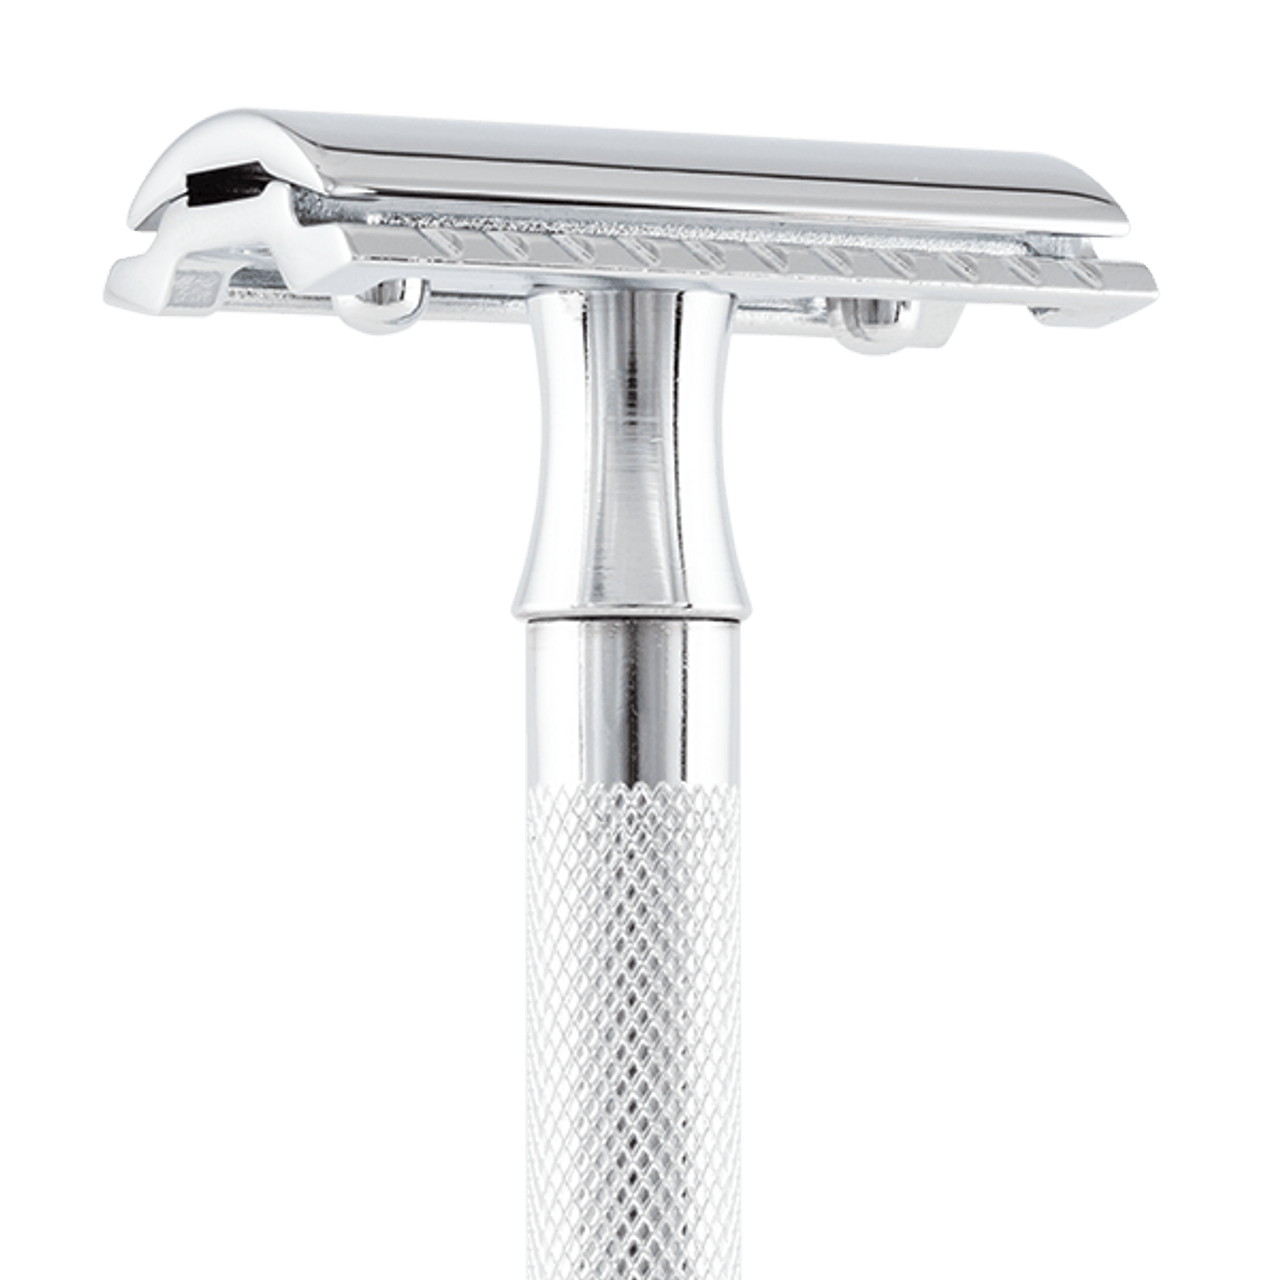 Merkur Double Edge Safety Razor with Comb Guard